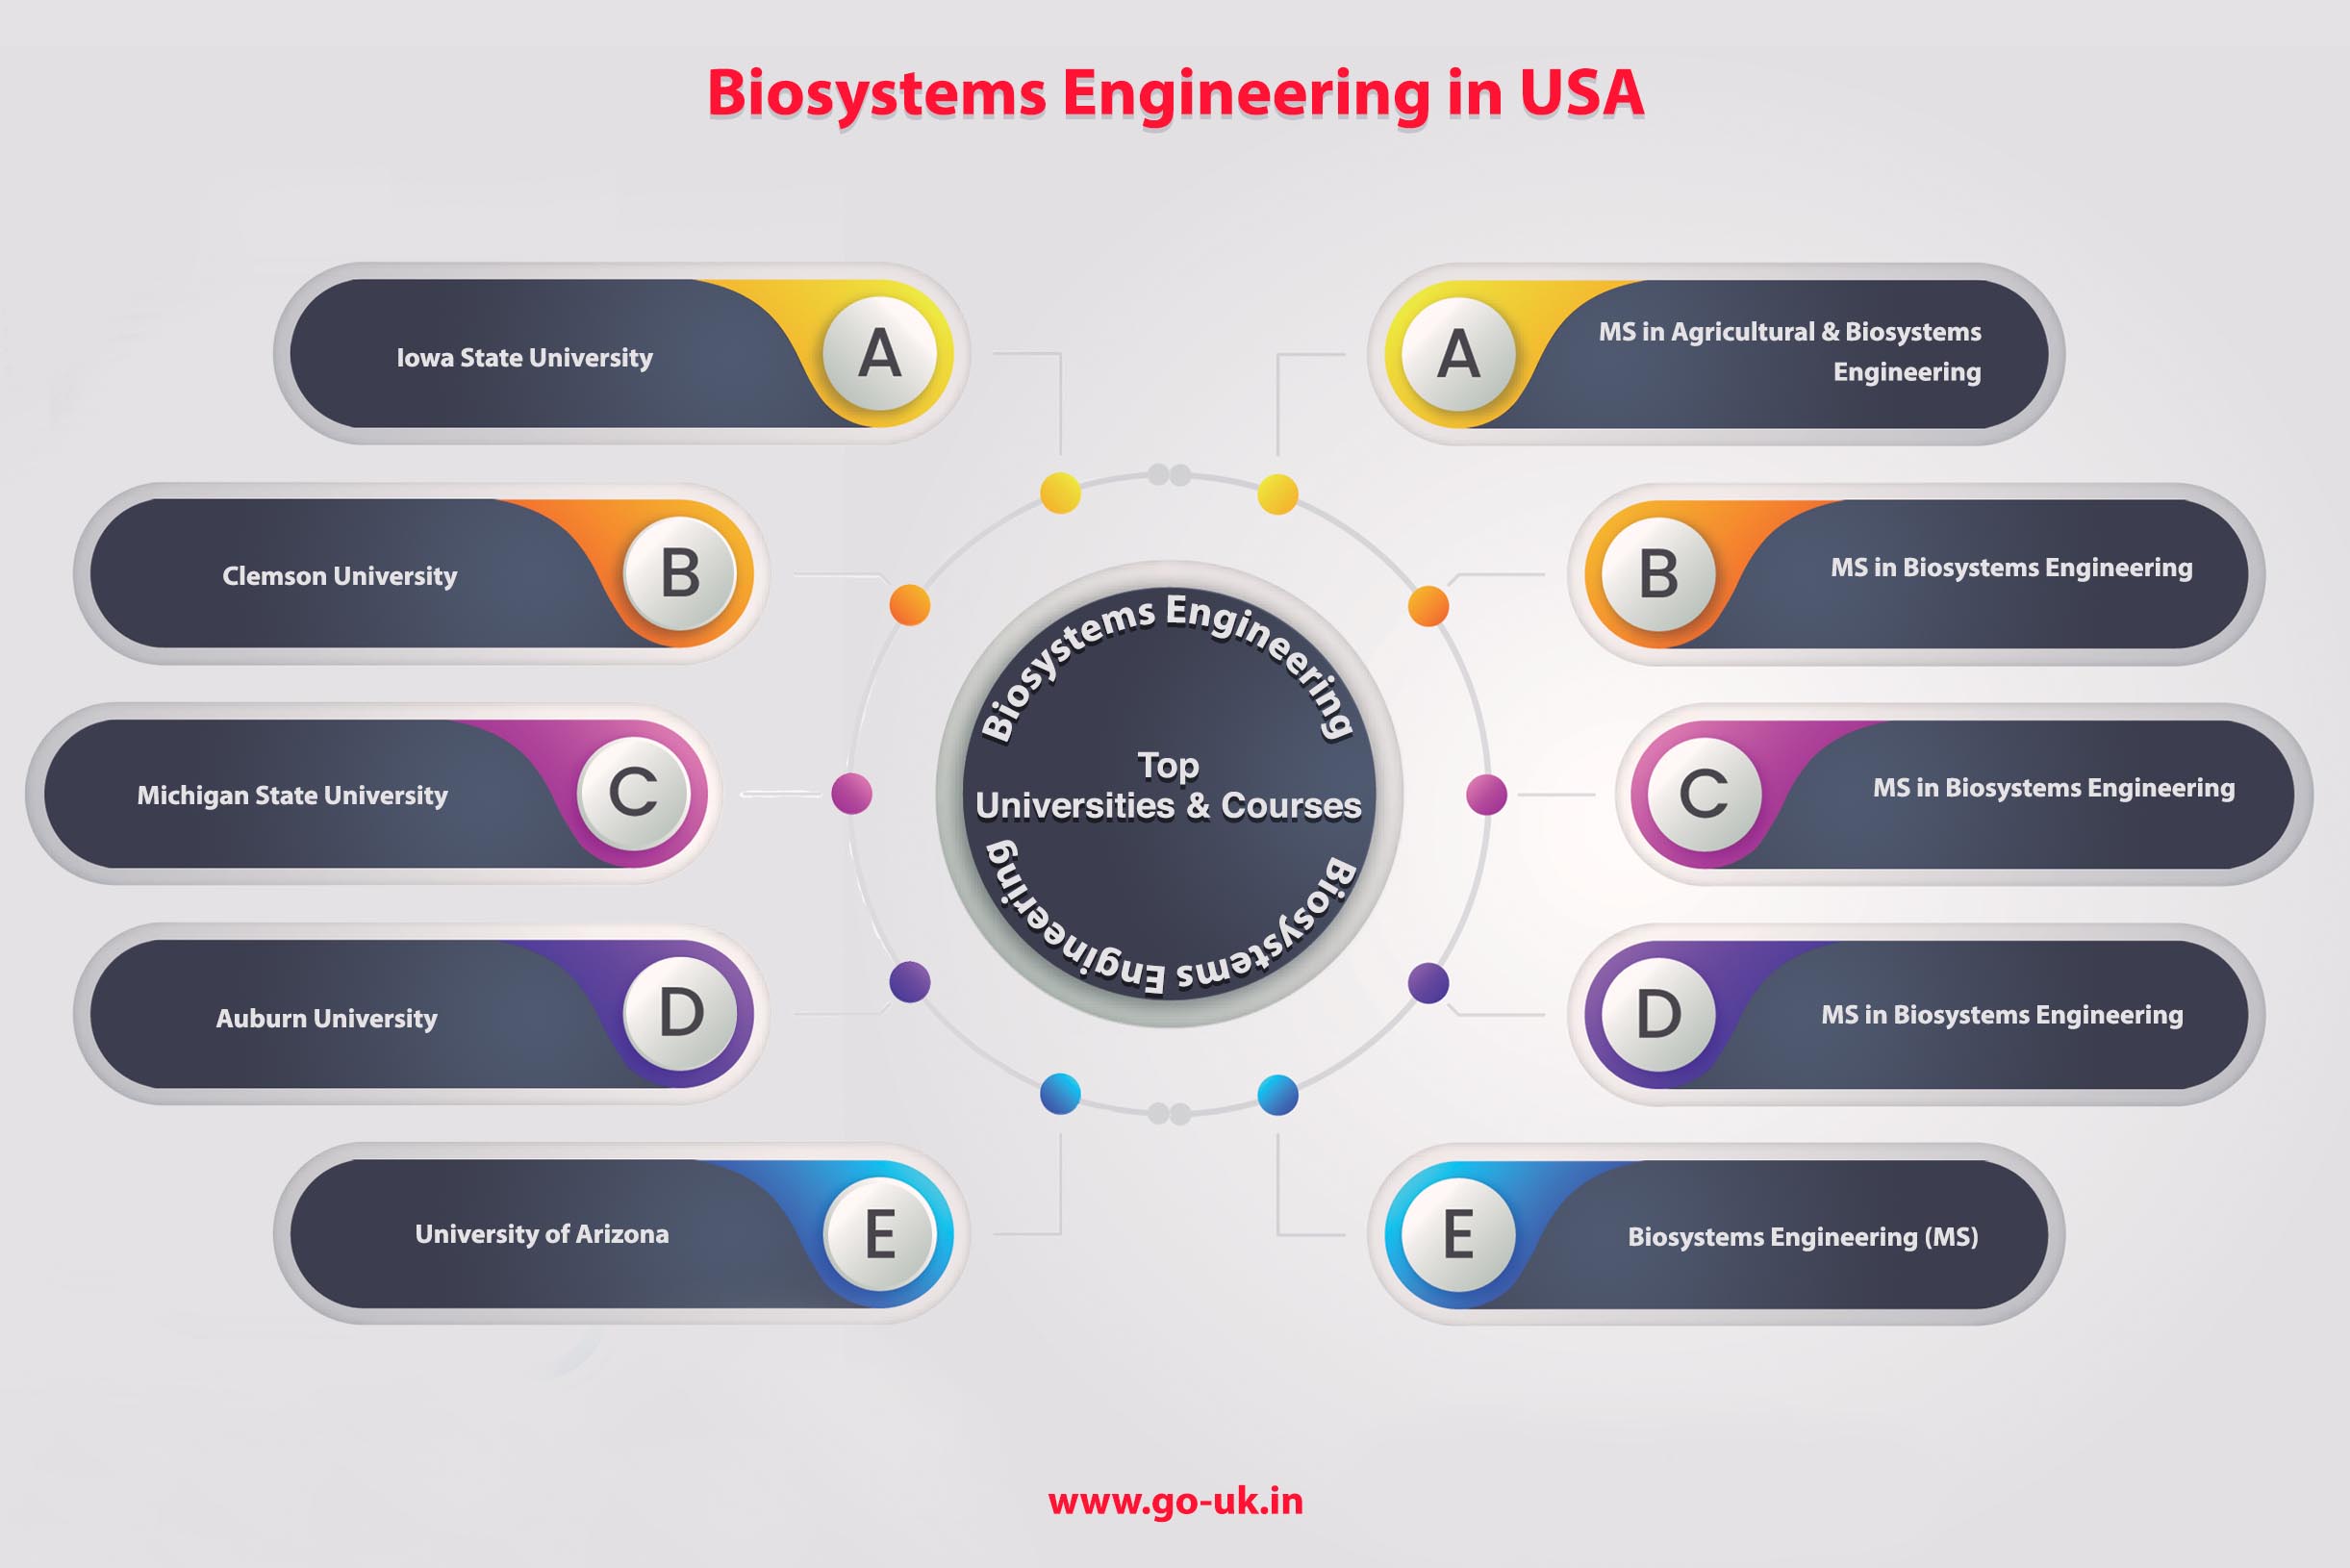 Biosystems Engineering in USA